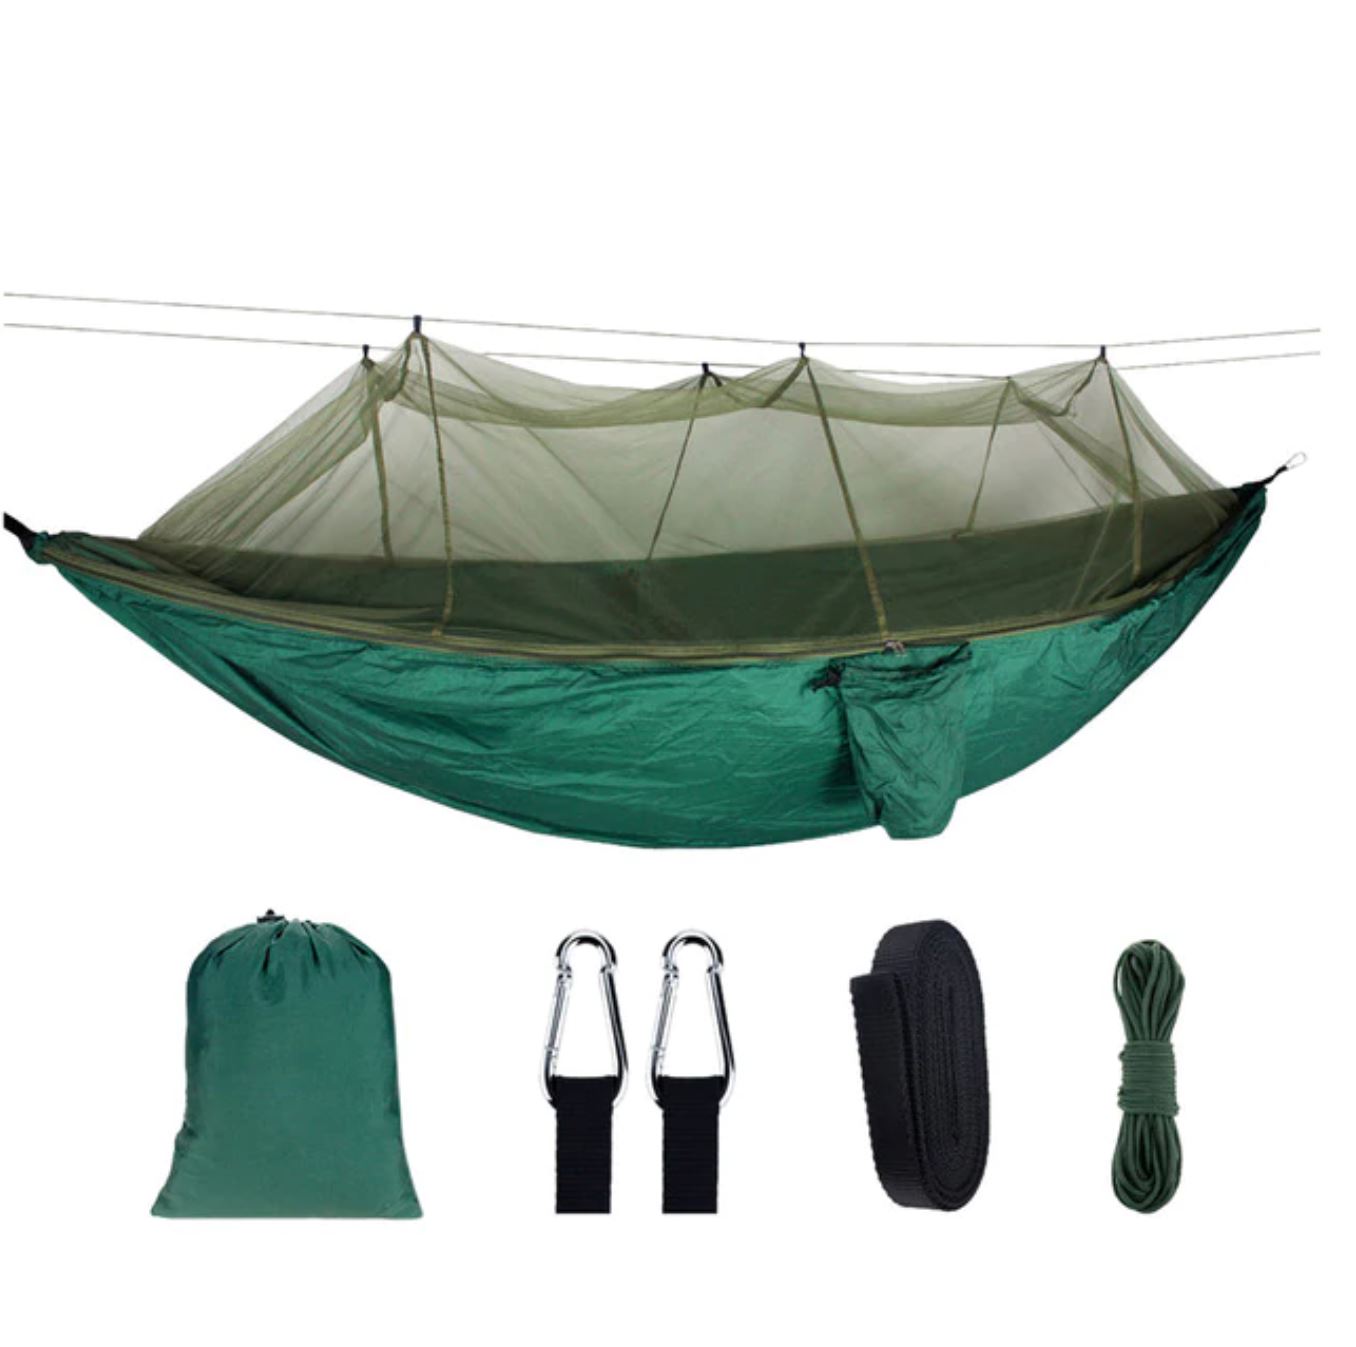 Hammock + Anti Mosquito Net Jungle Military Parachute Bushcraft Camping Survival